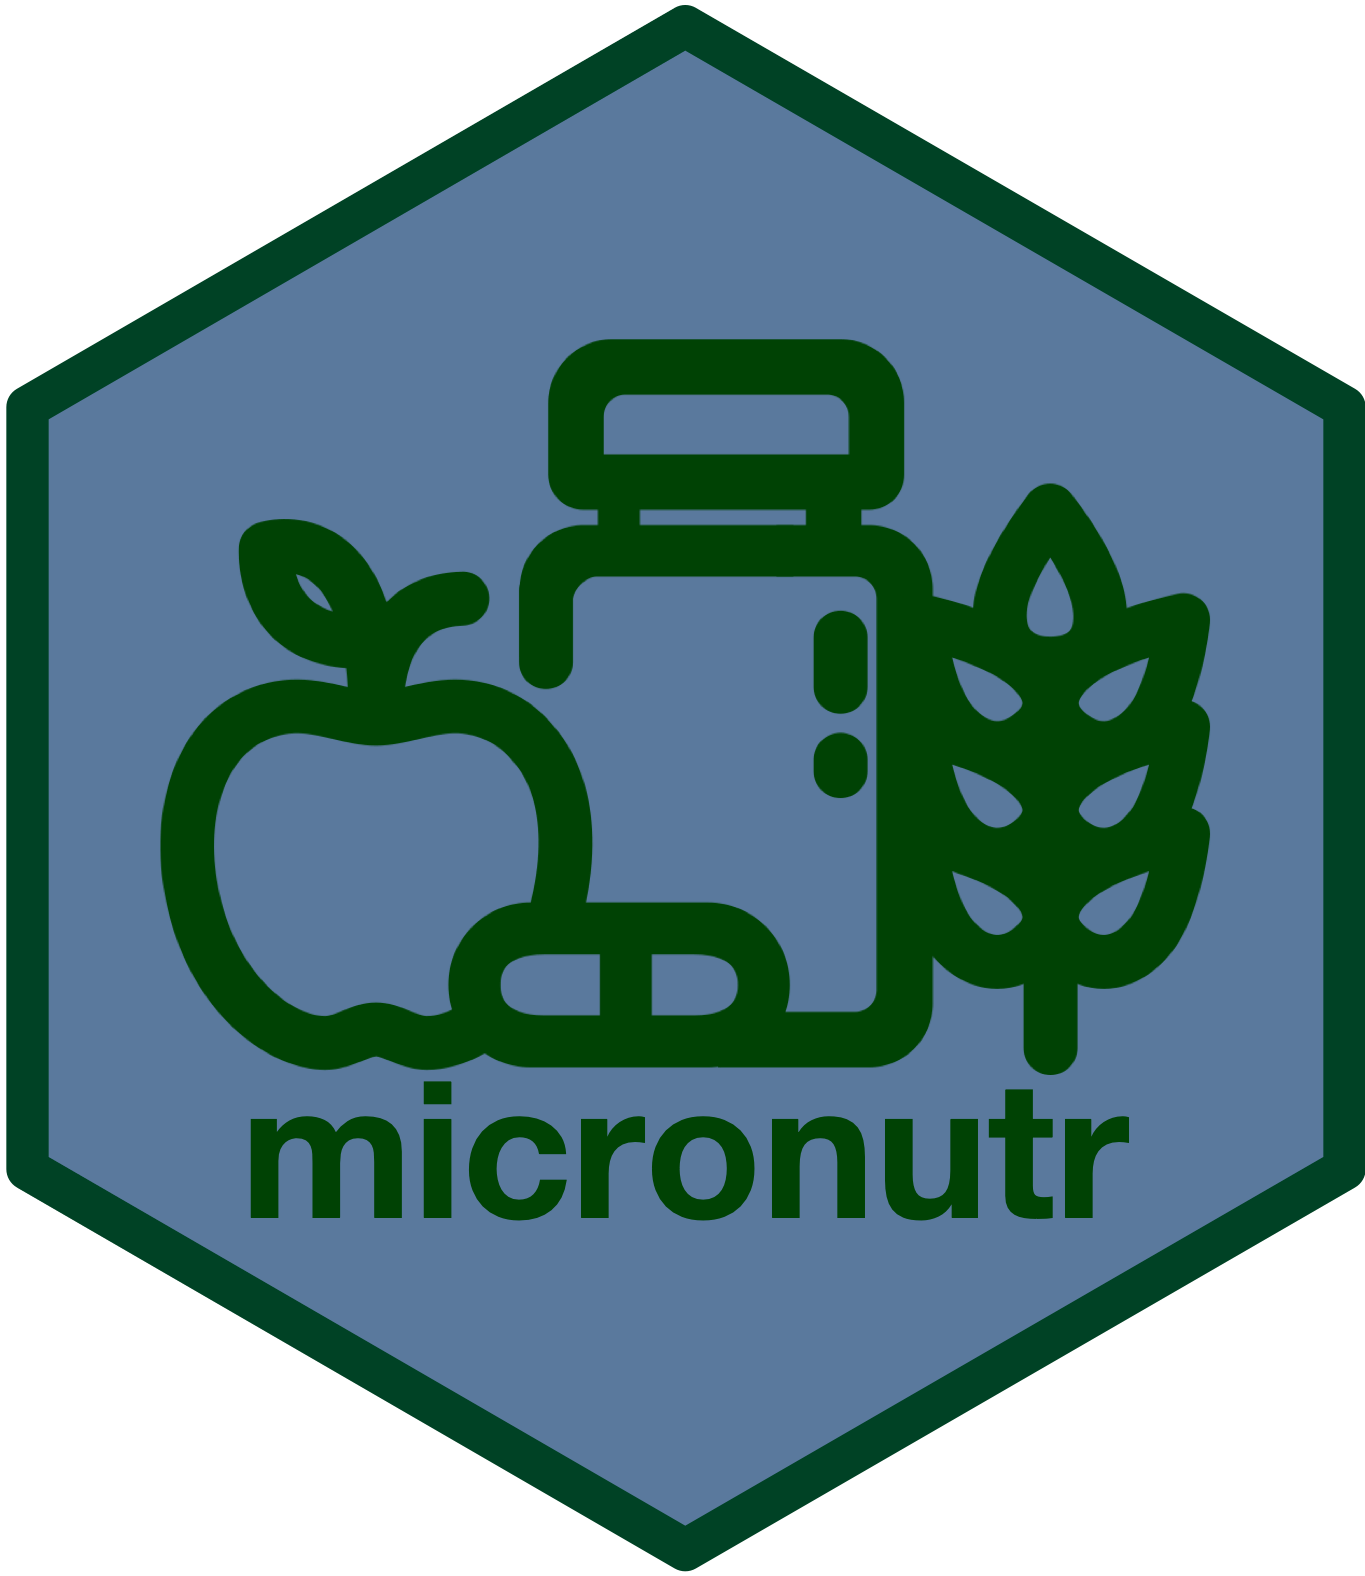 micronutr hex sticker